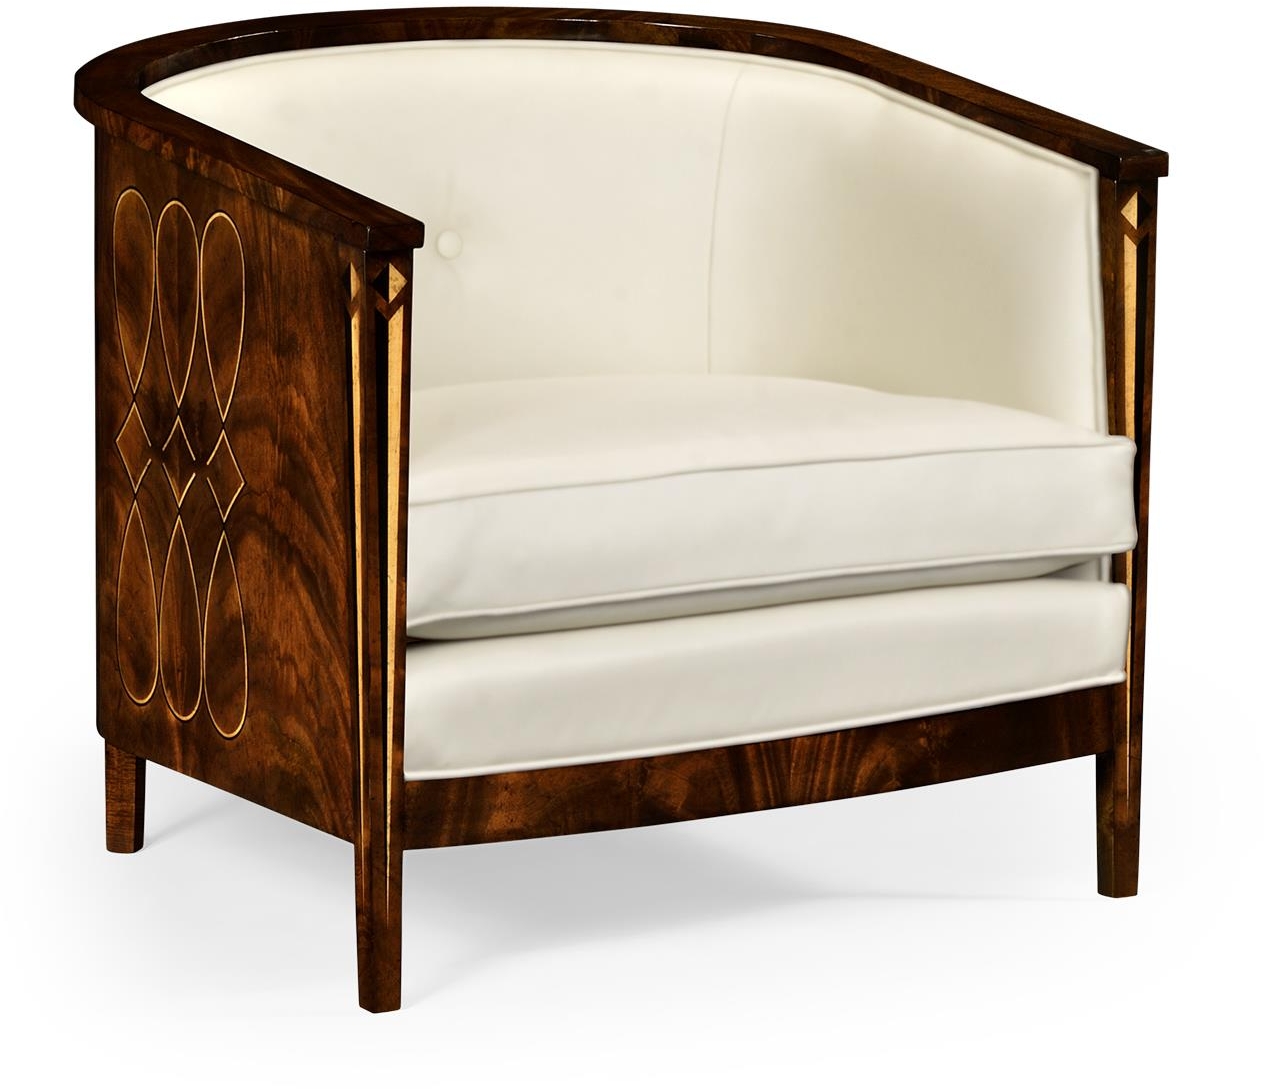 Biedermeier tub chair with sweeping inlays, flamed mahogany veneer, and contrasting satinwood inlays.